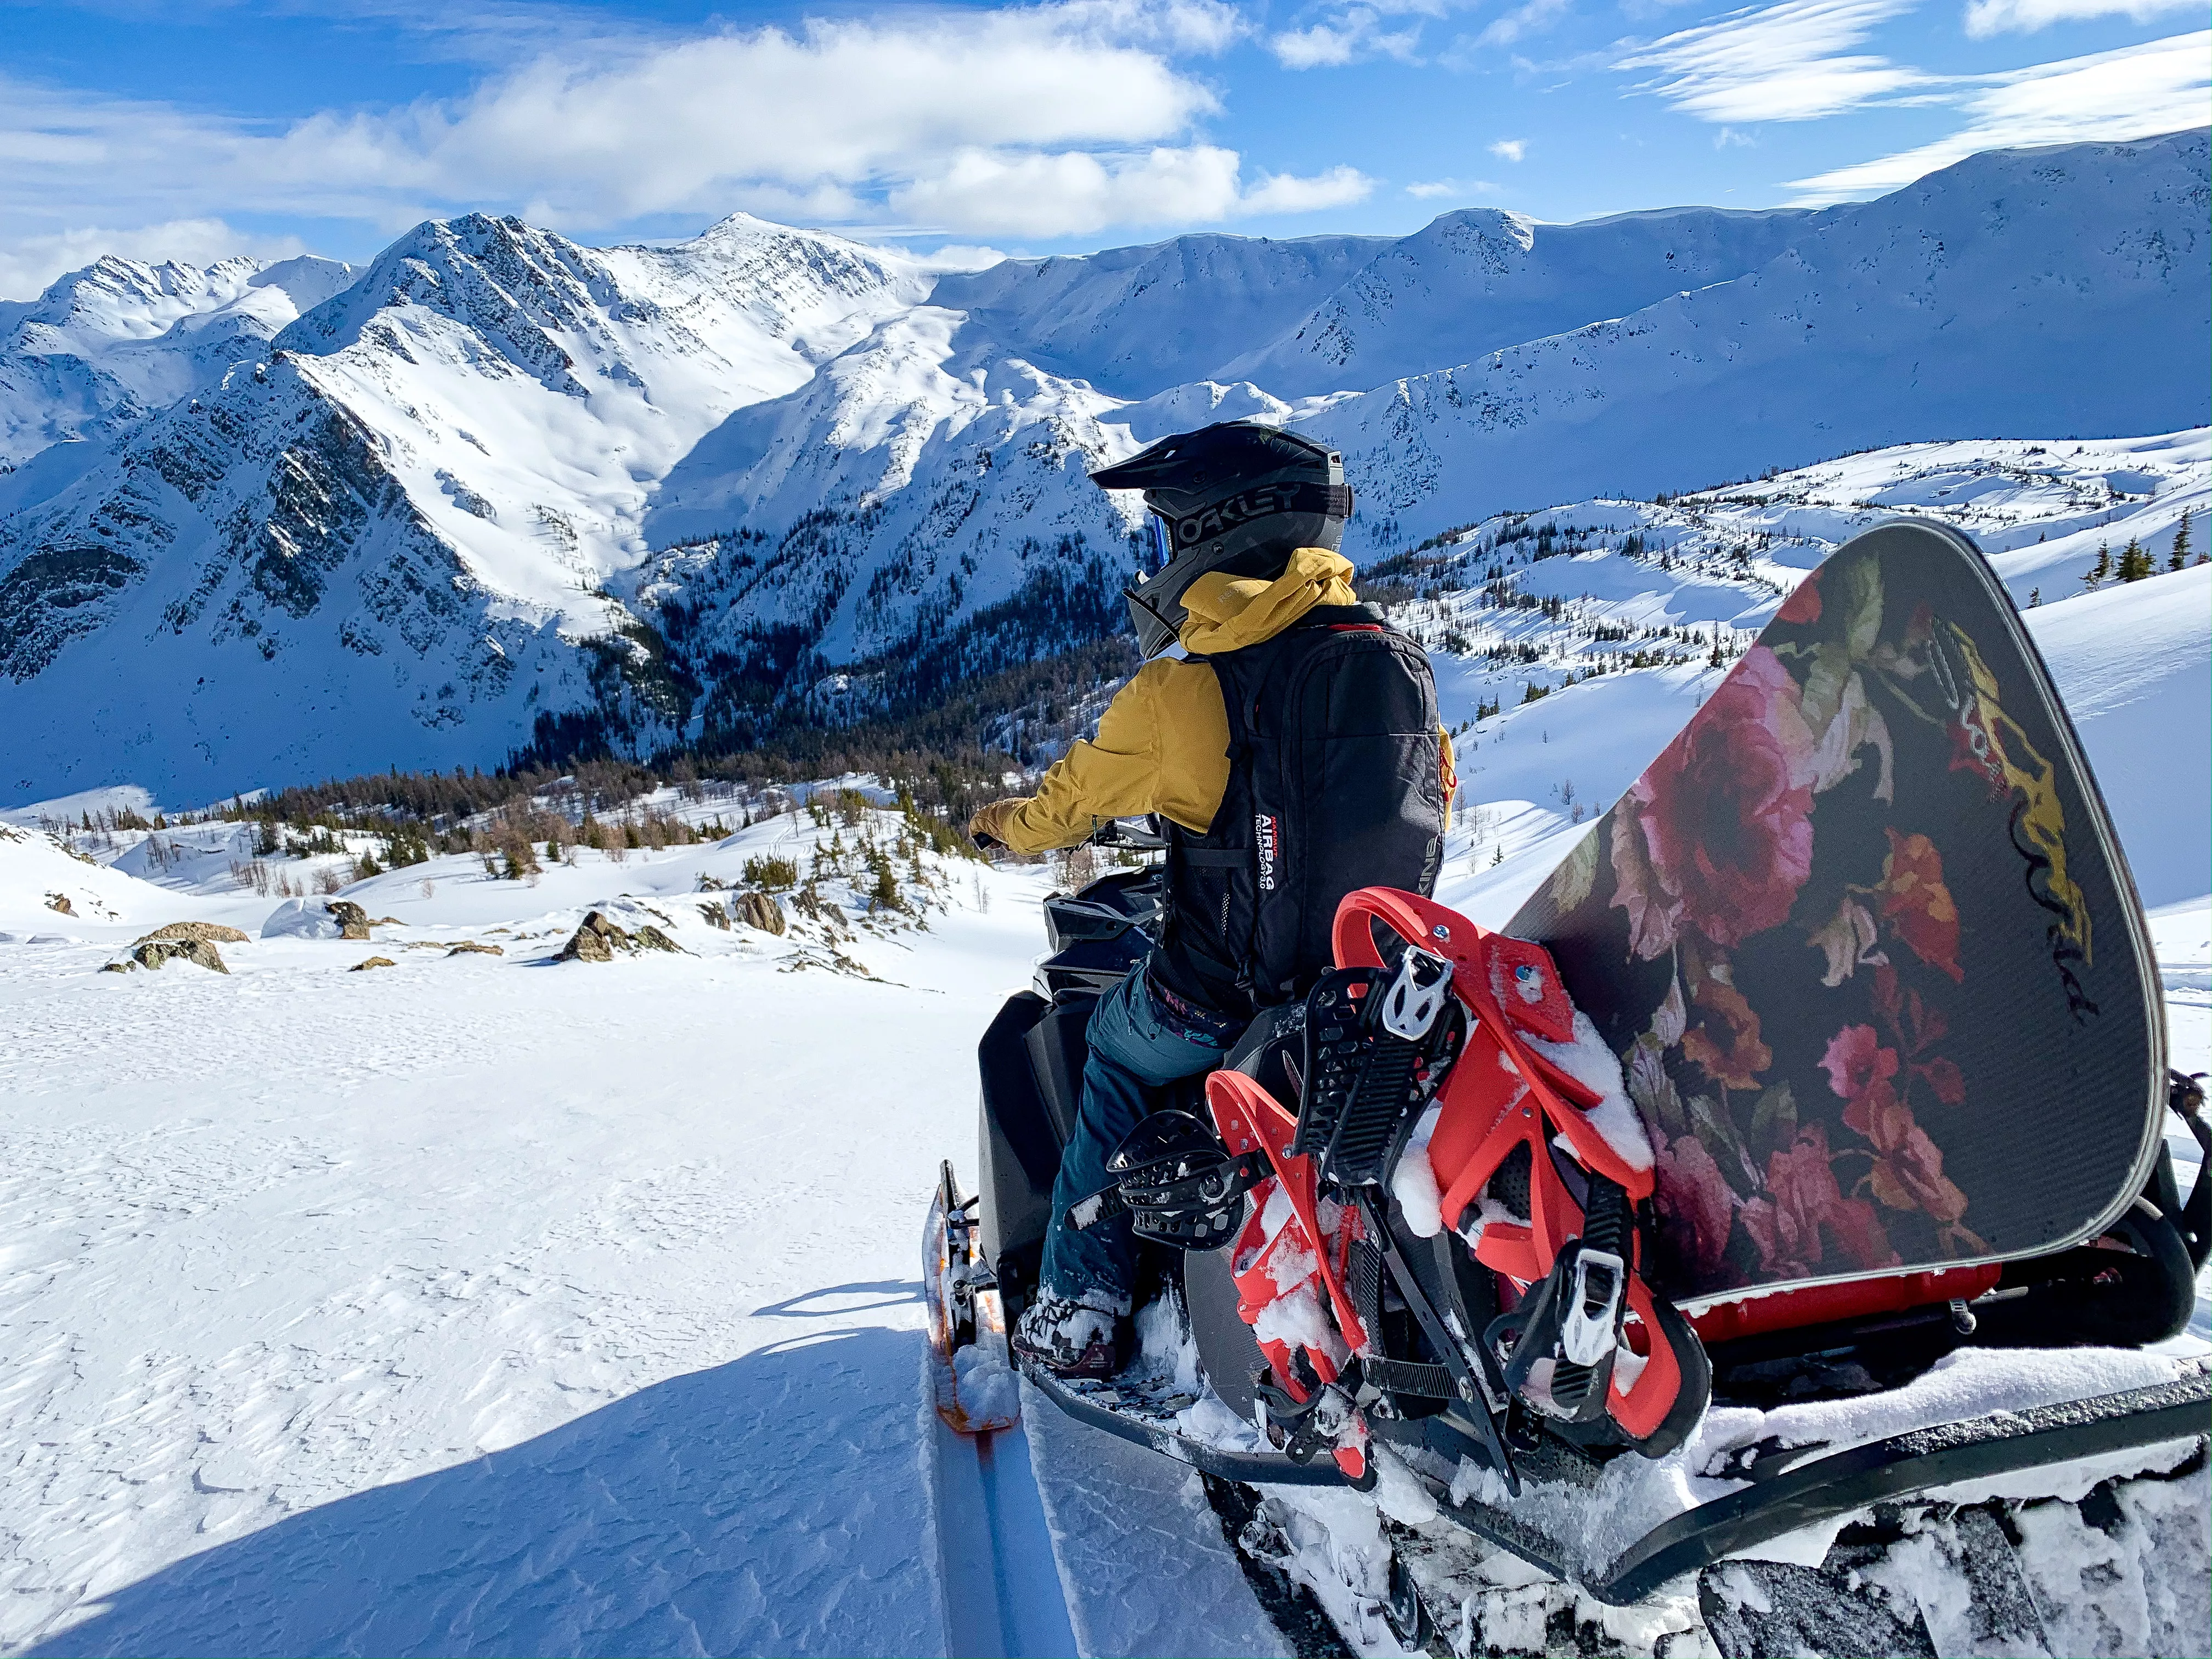 Revelstoke Powder Rentals in Canada, North America | Snowboarding,Skiing - Rated 0.9